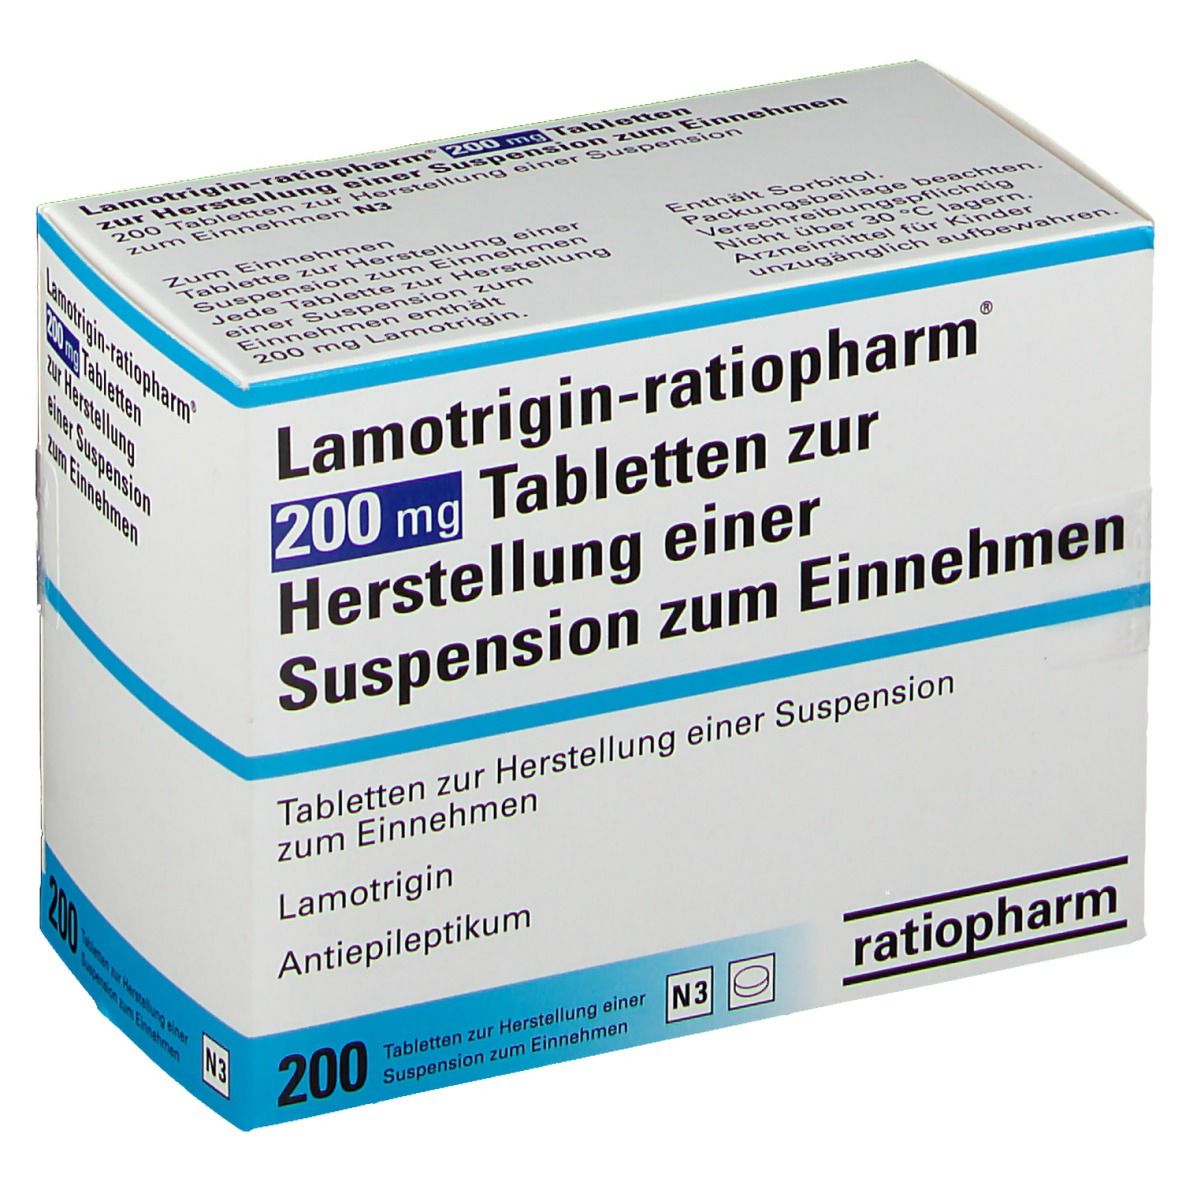 Lamotrigin-ratiopharm® 200 mg